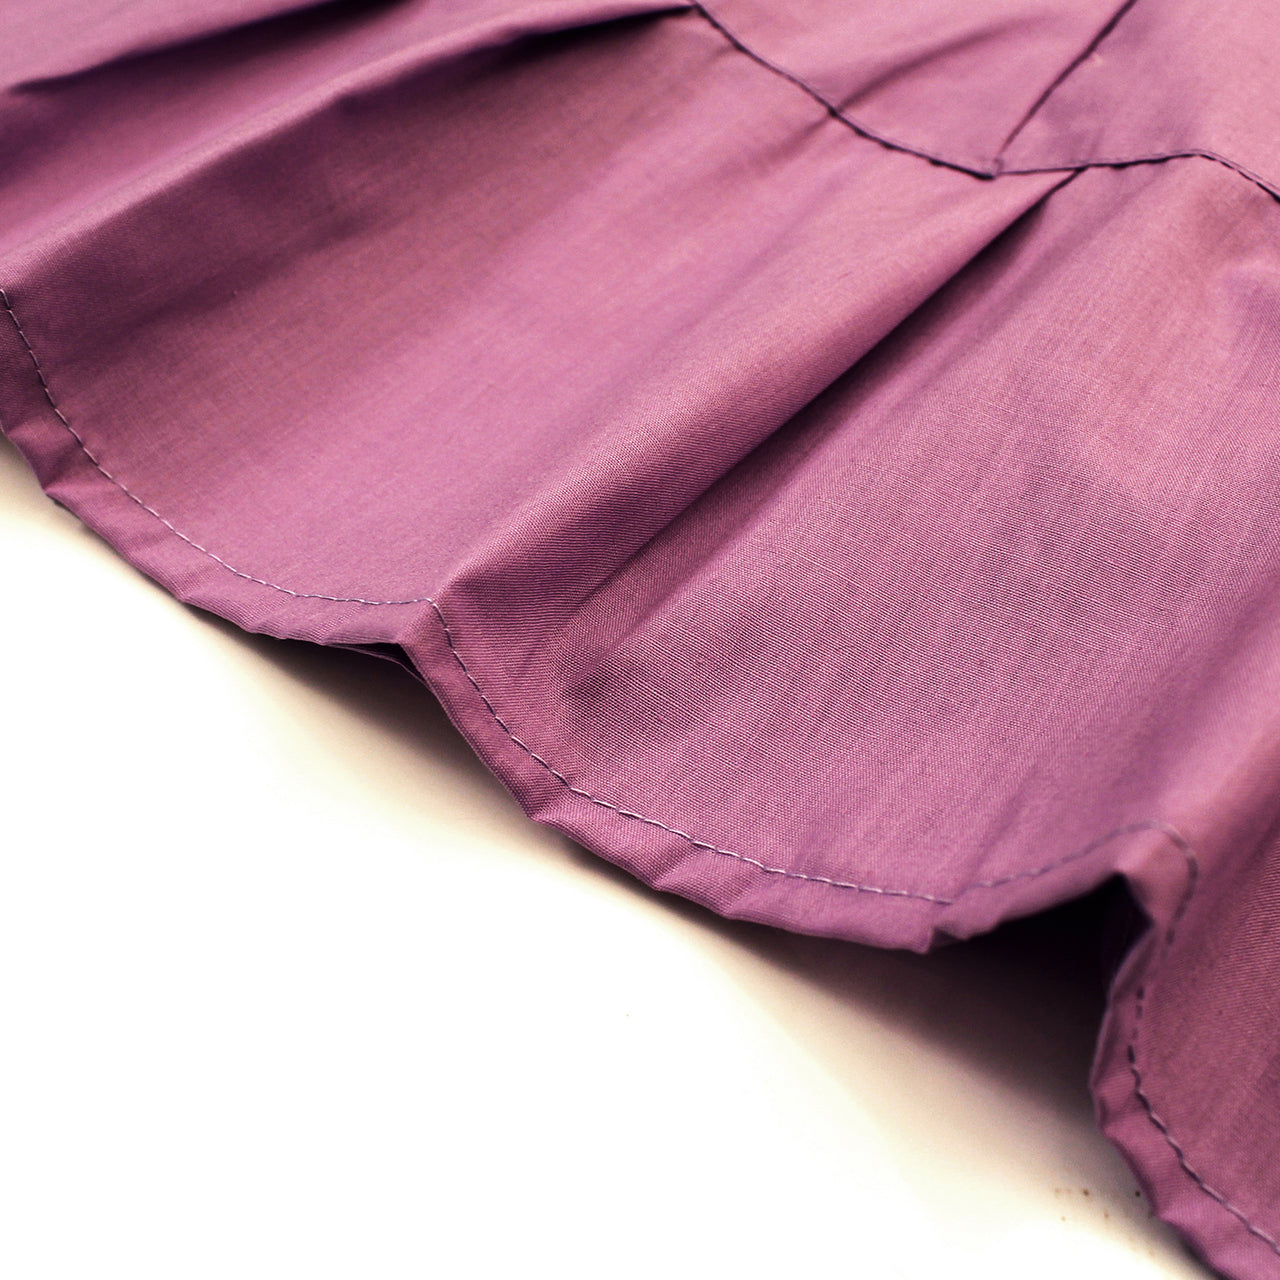 Dark Lilac - Sari (Saree) Petticoat - Available in S, M, L & XL - Underskirts For Sari's